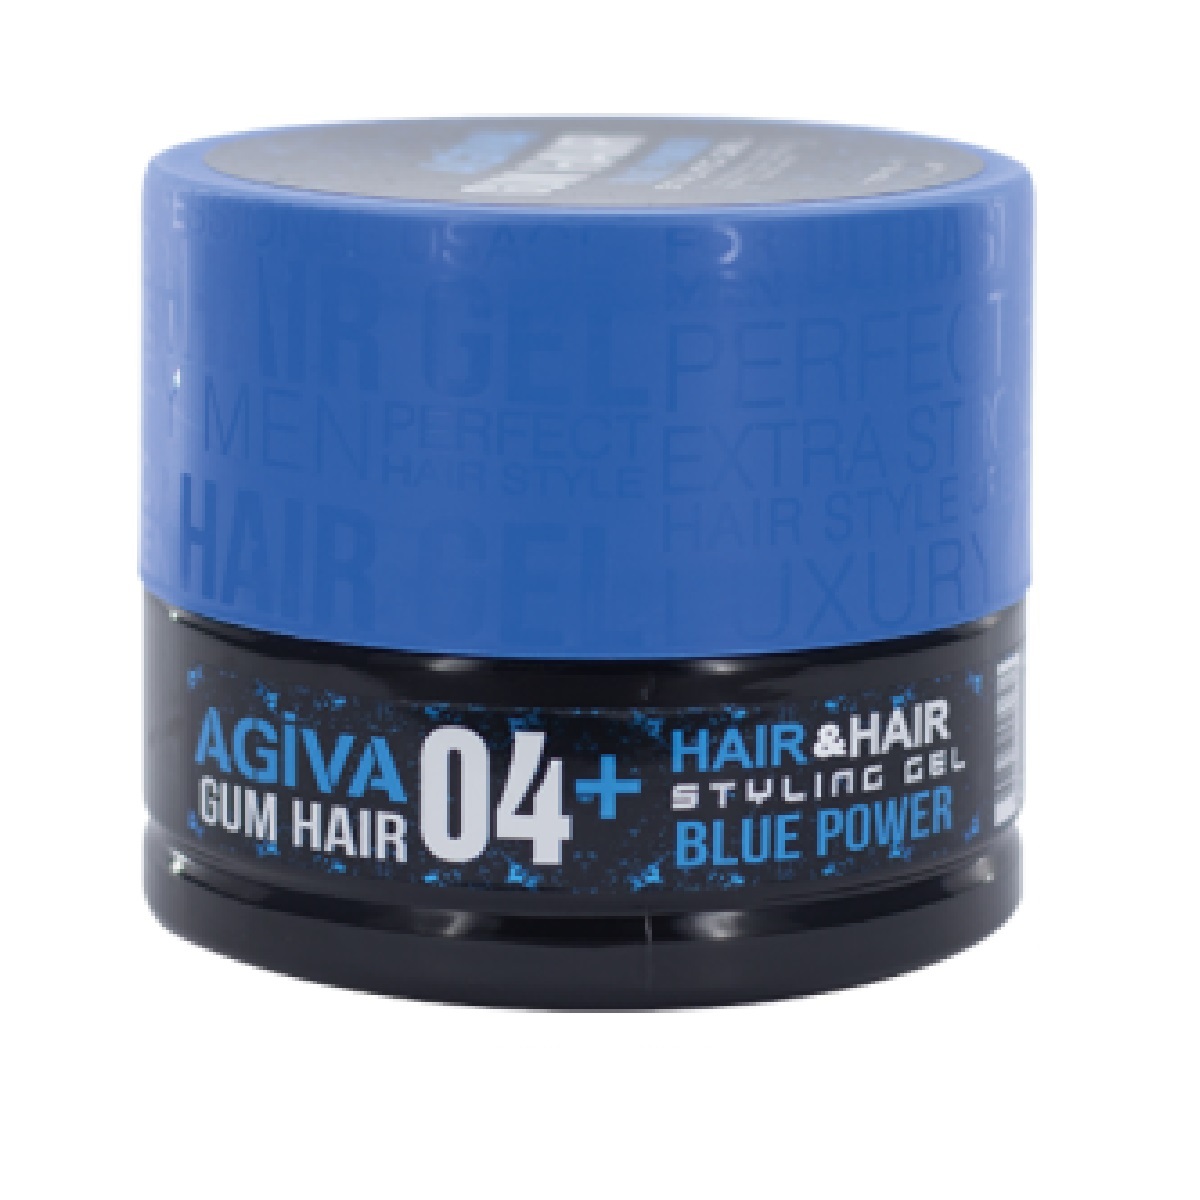 Гель для укладки волос AGIVA Hair Gum Blue Power 04+700 мл